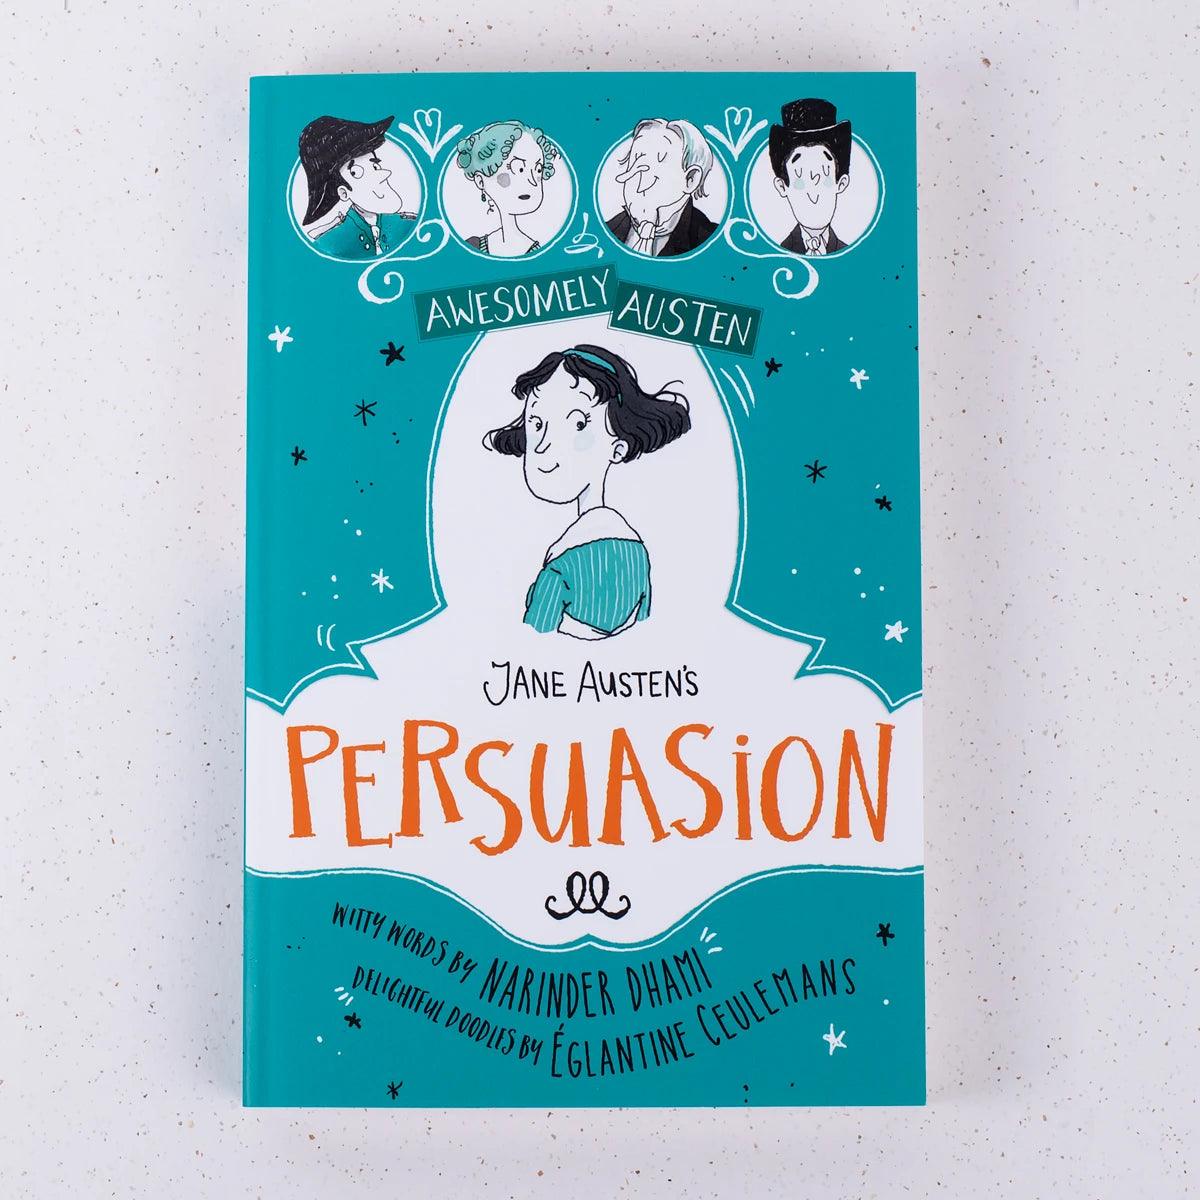 Jane Austen's Persuasion - Awesomely Austen Retold & Illustrated - JaneAusten.co.uk